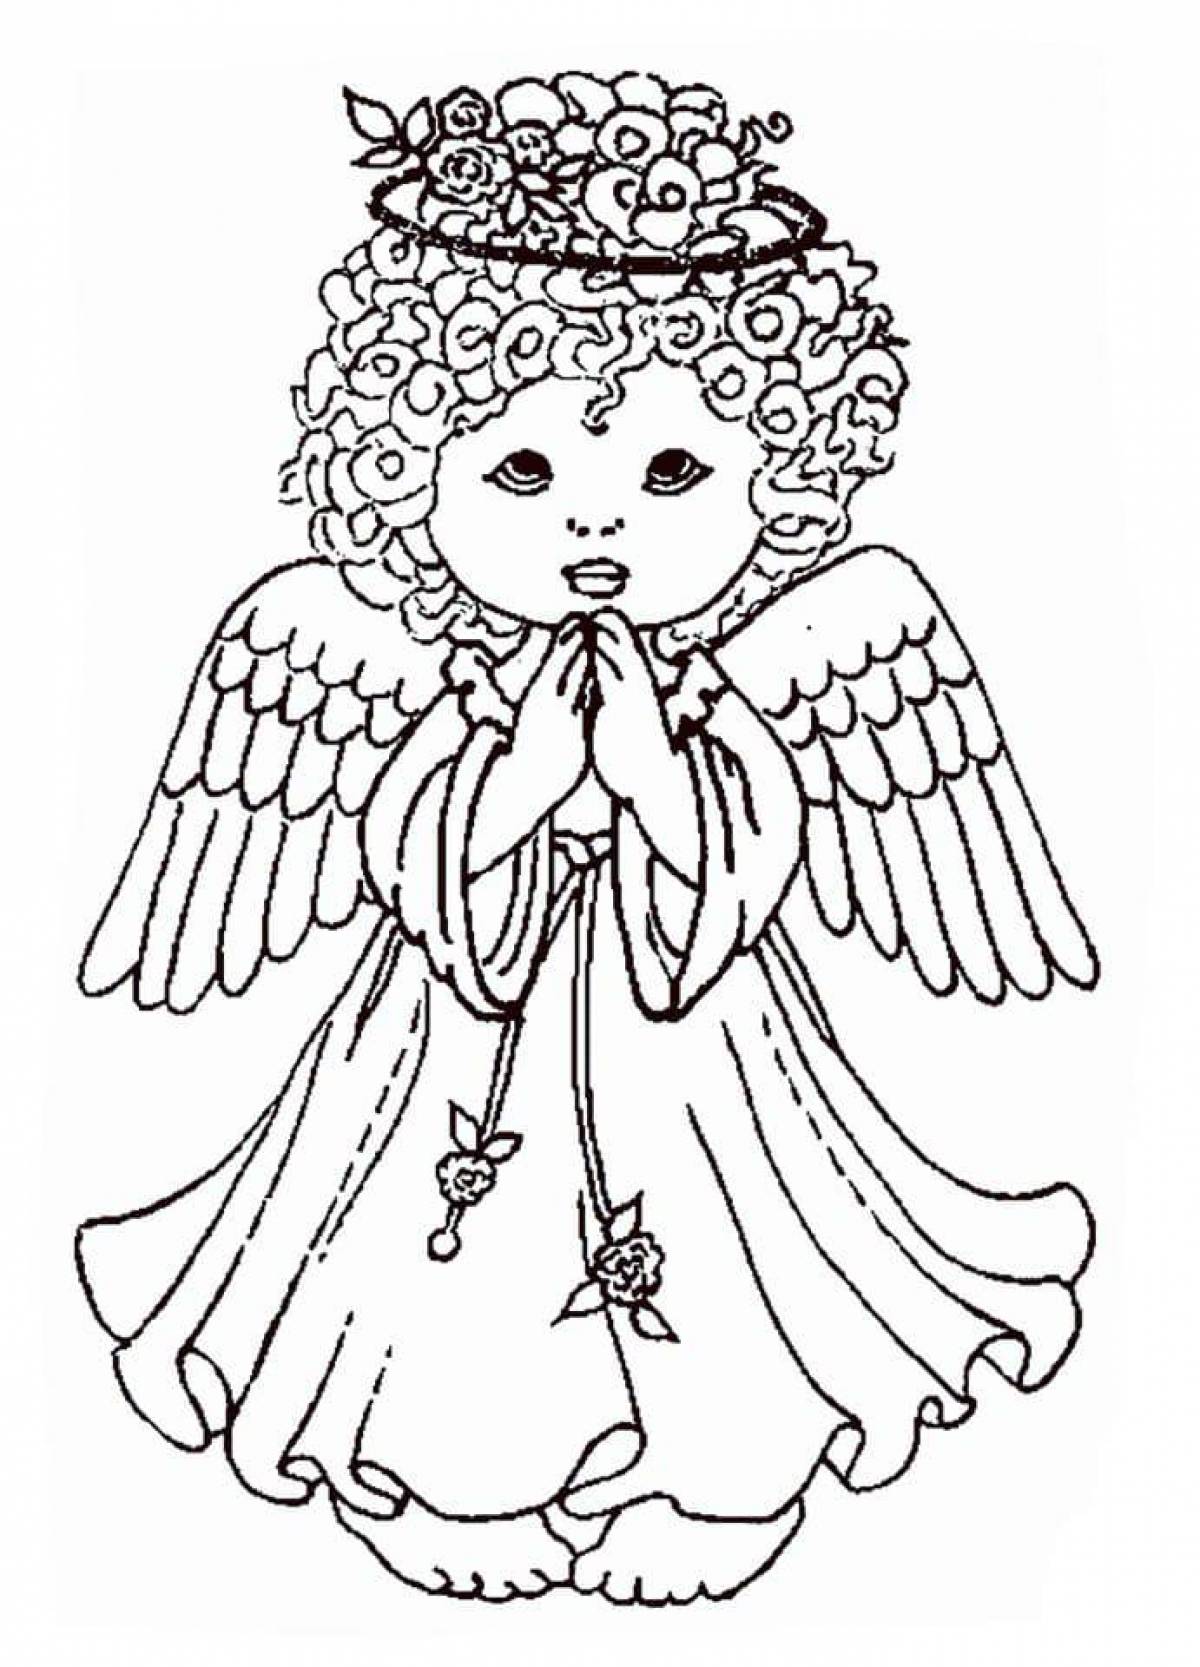 Peaceful angel coloring